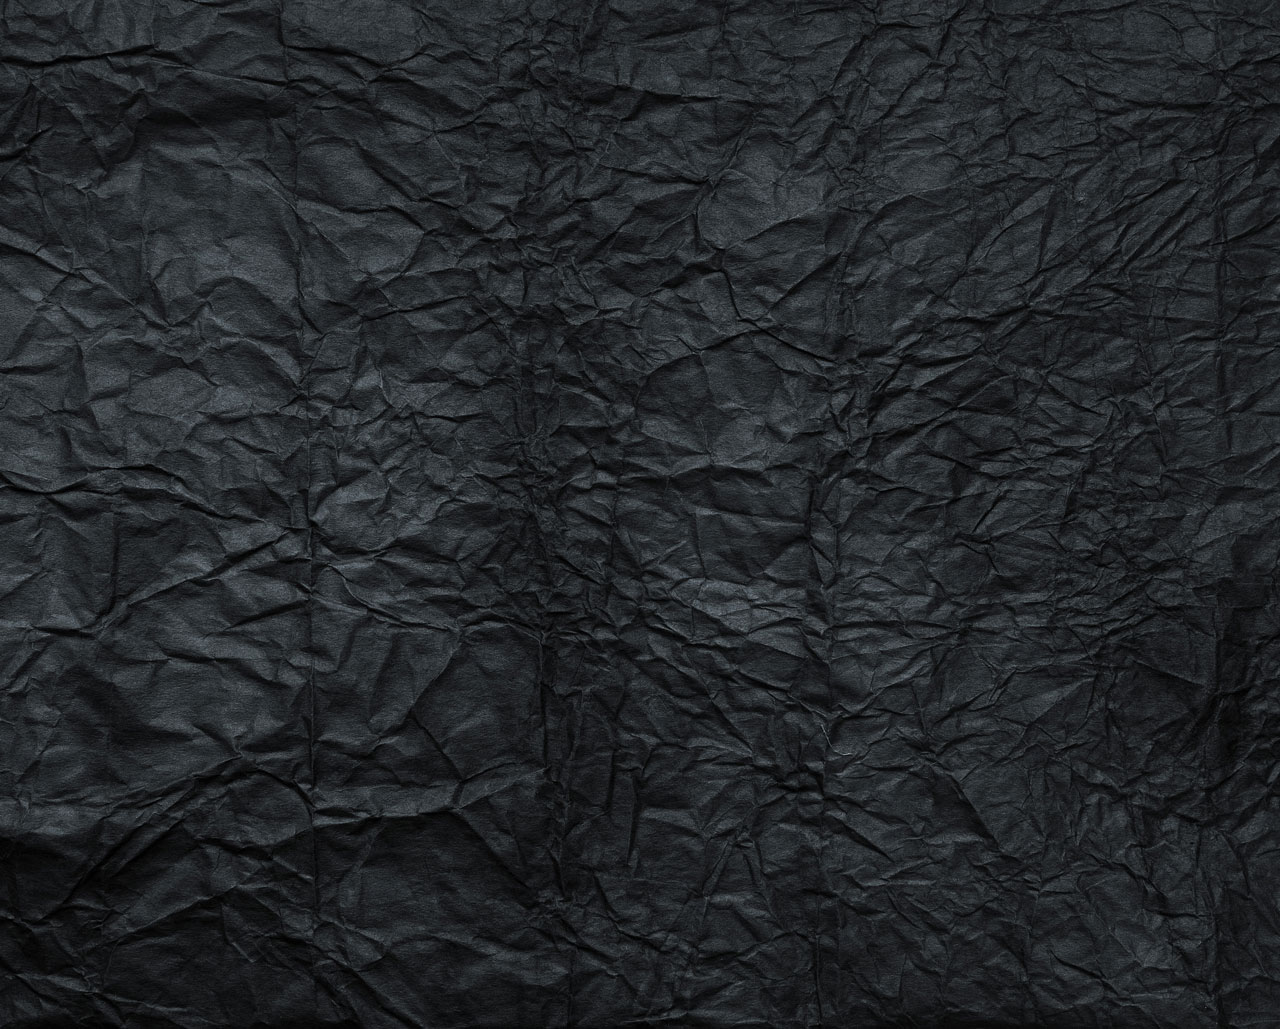 wildtextures-creased-black-paper-texture